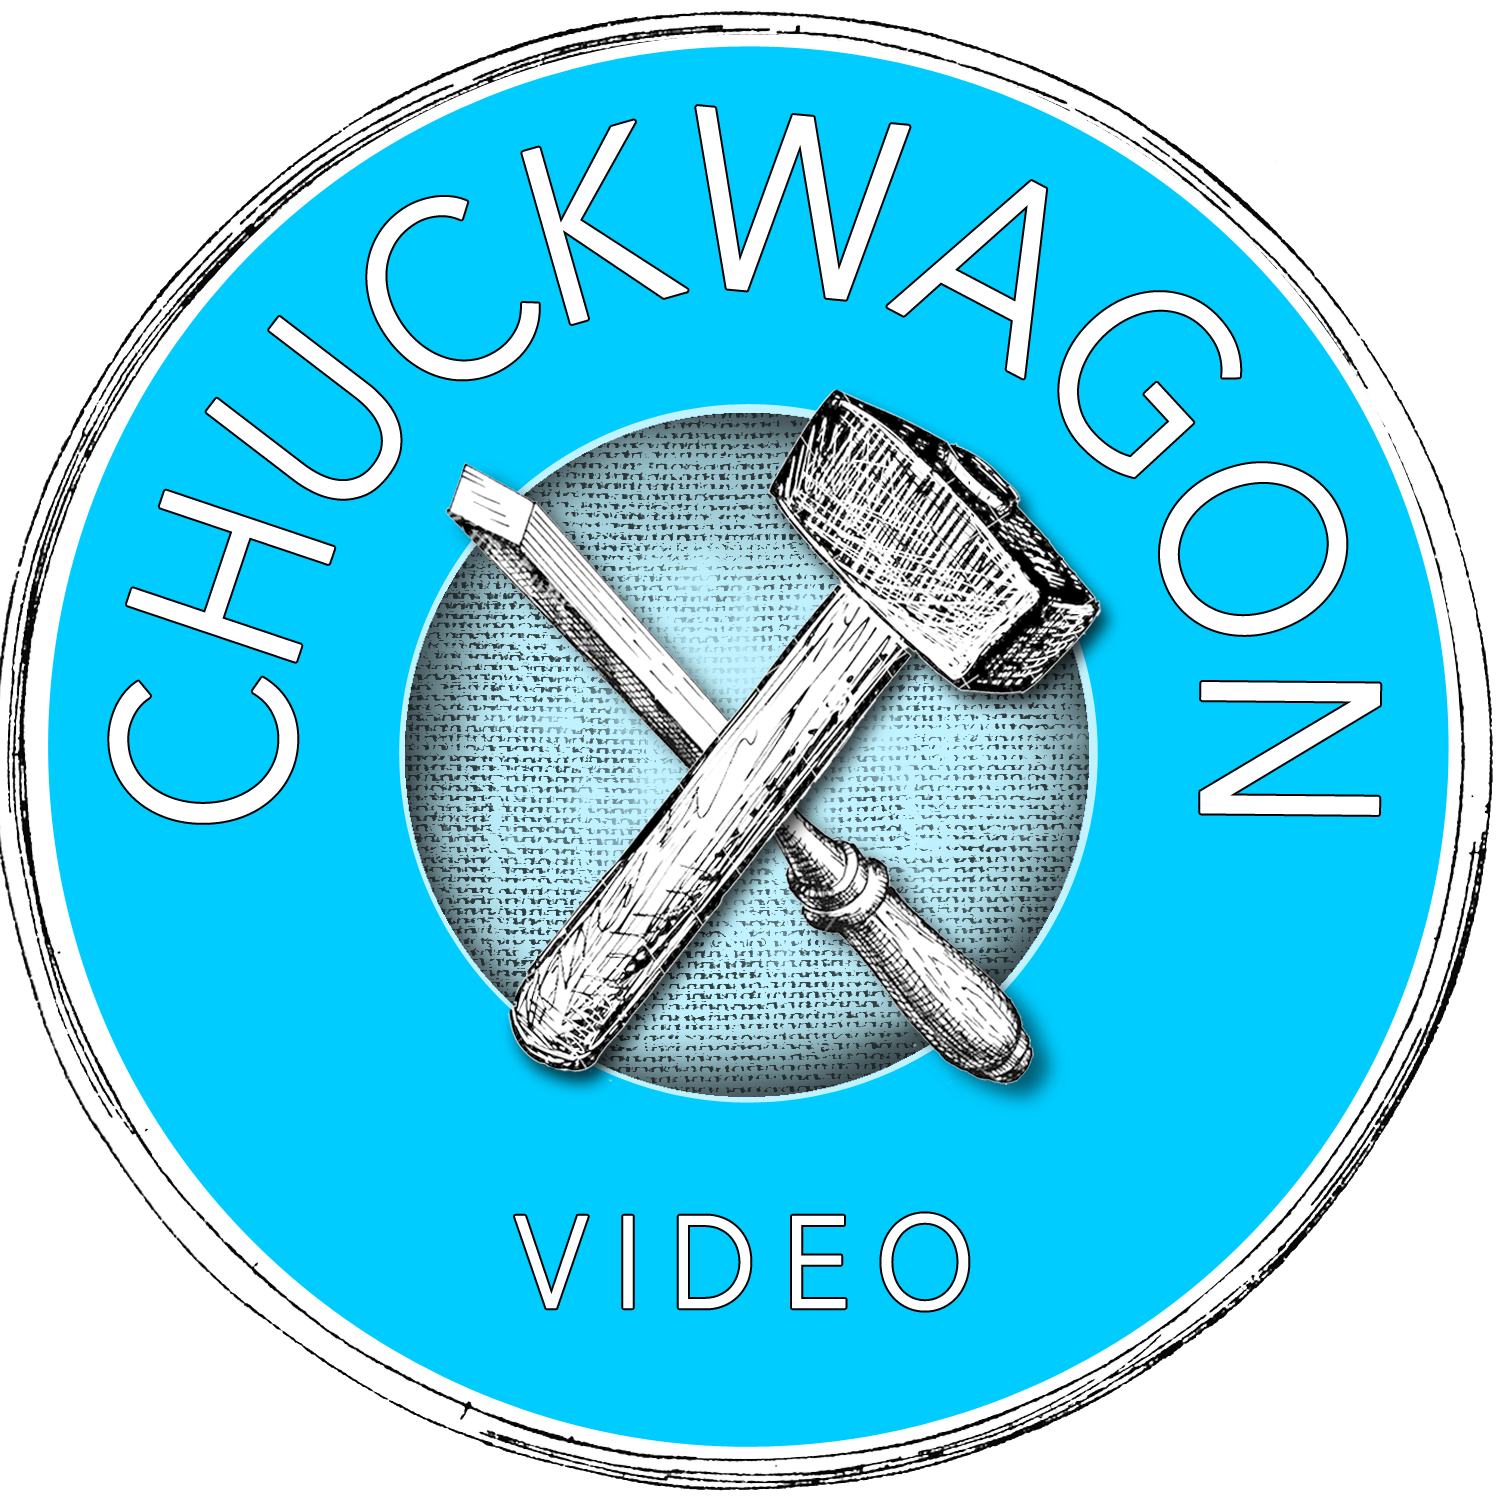 Chuckwagon Video